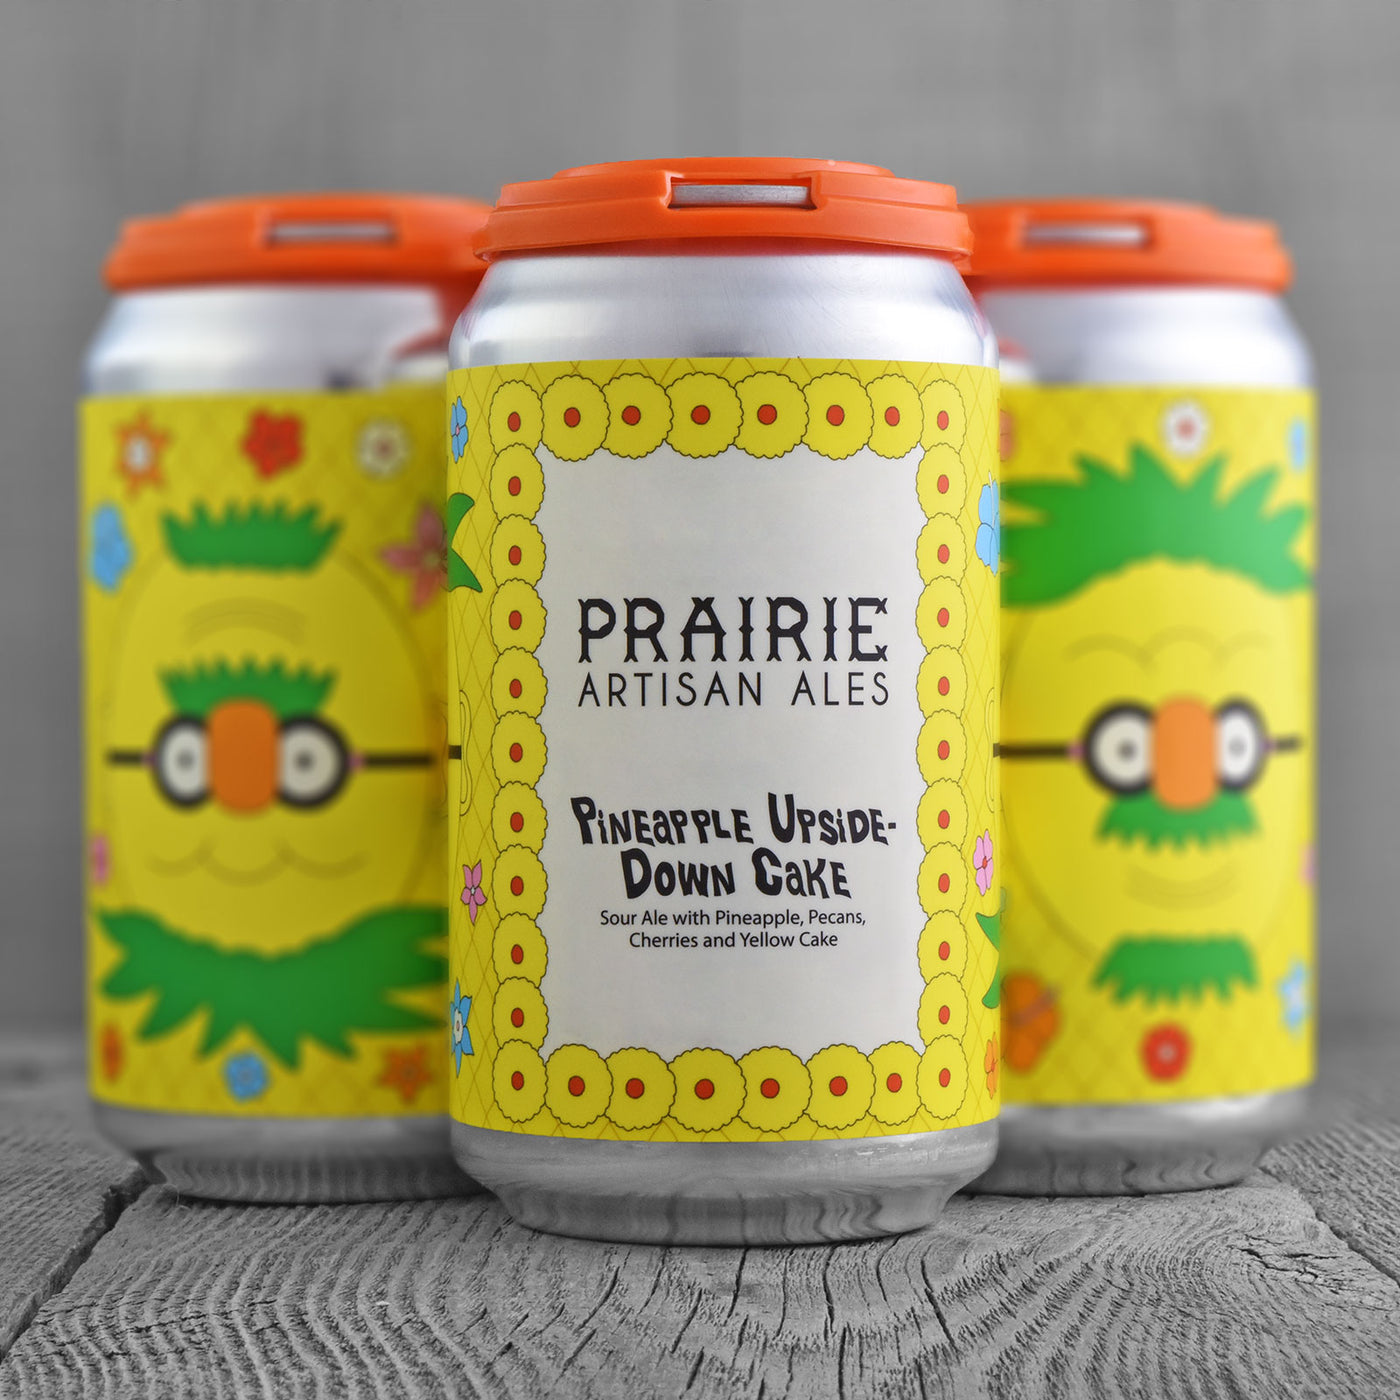 Prairie Pineapple Upside-Down Cake